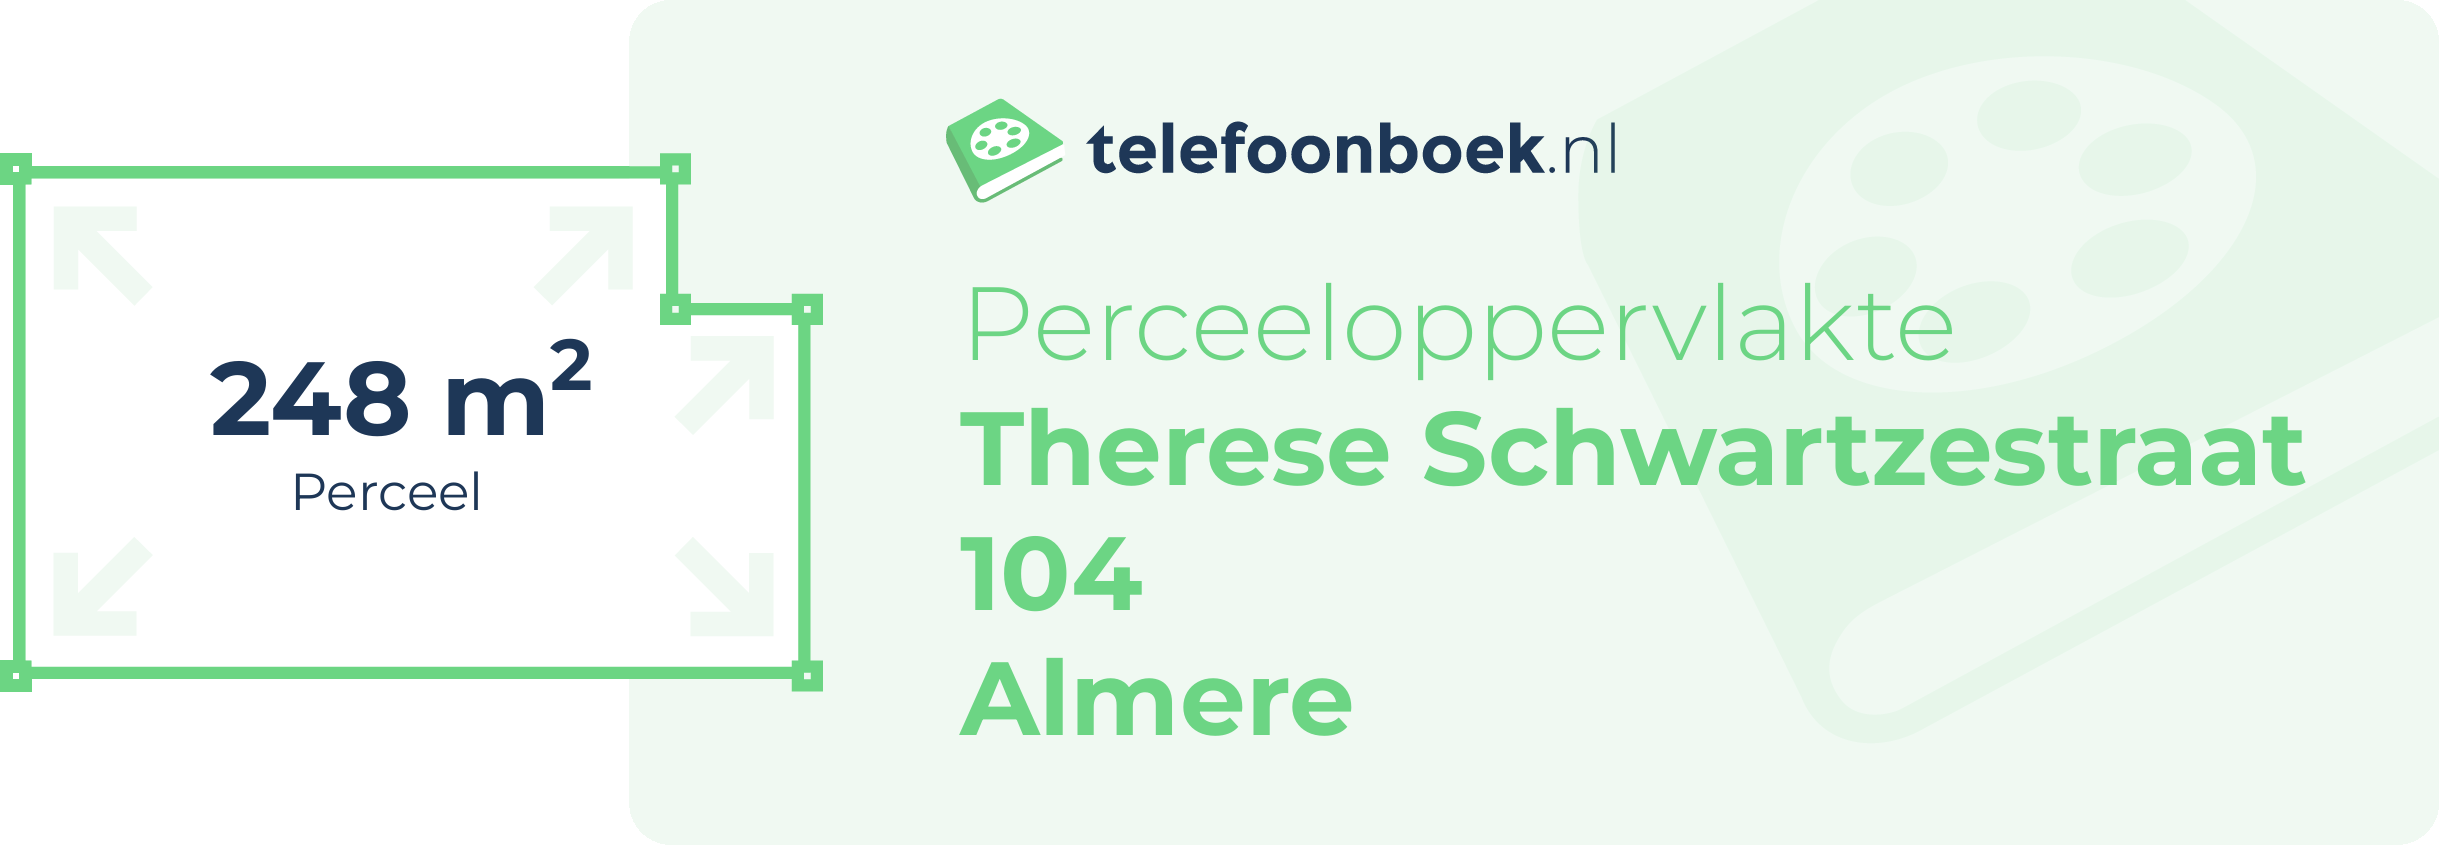 Perceeloppervlakte Therese Schwartzestraat 104 Almere